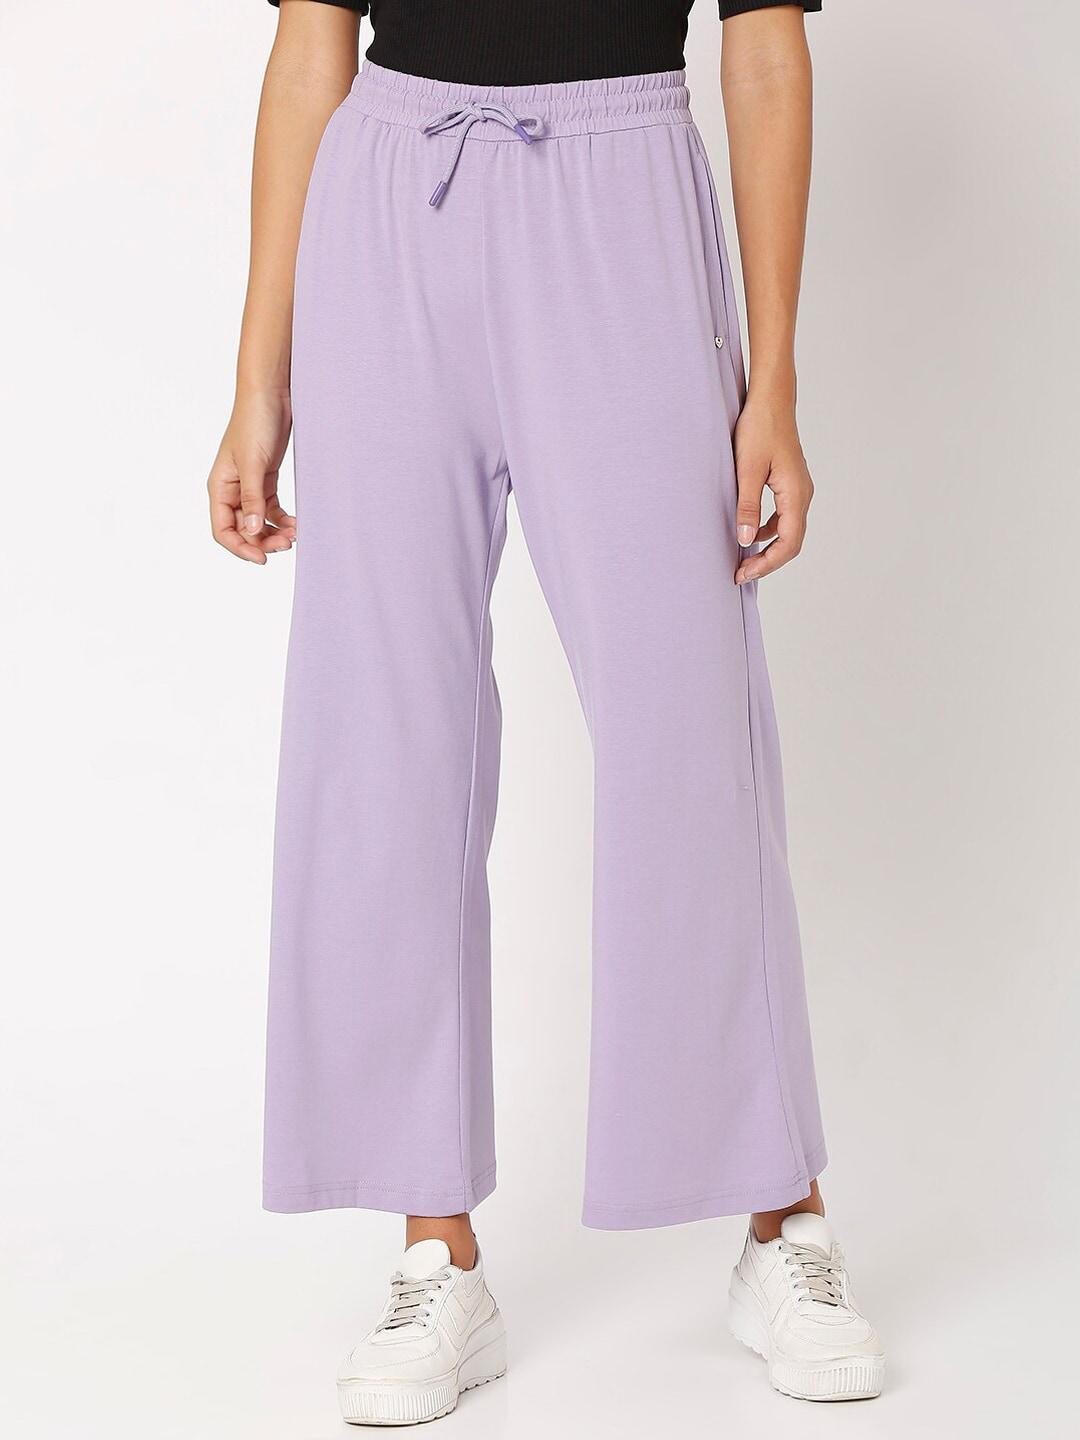 spykar-women-purple-solid-mid-rise-ribbed-lounge-pants